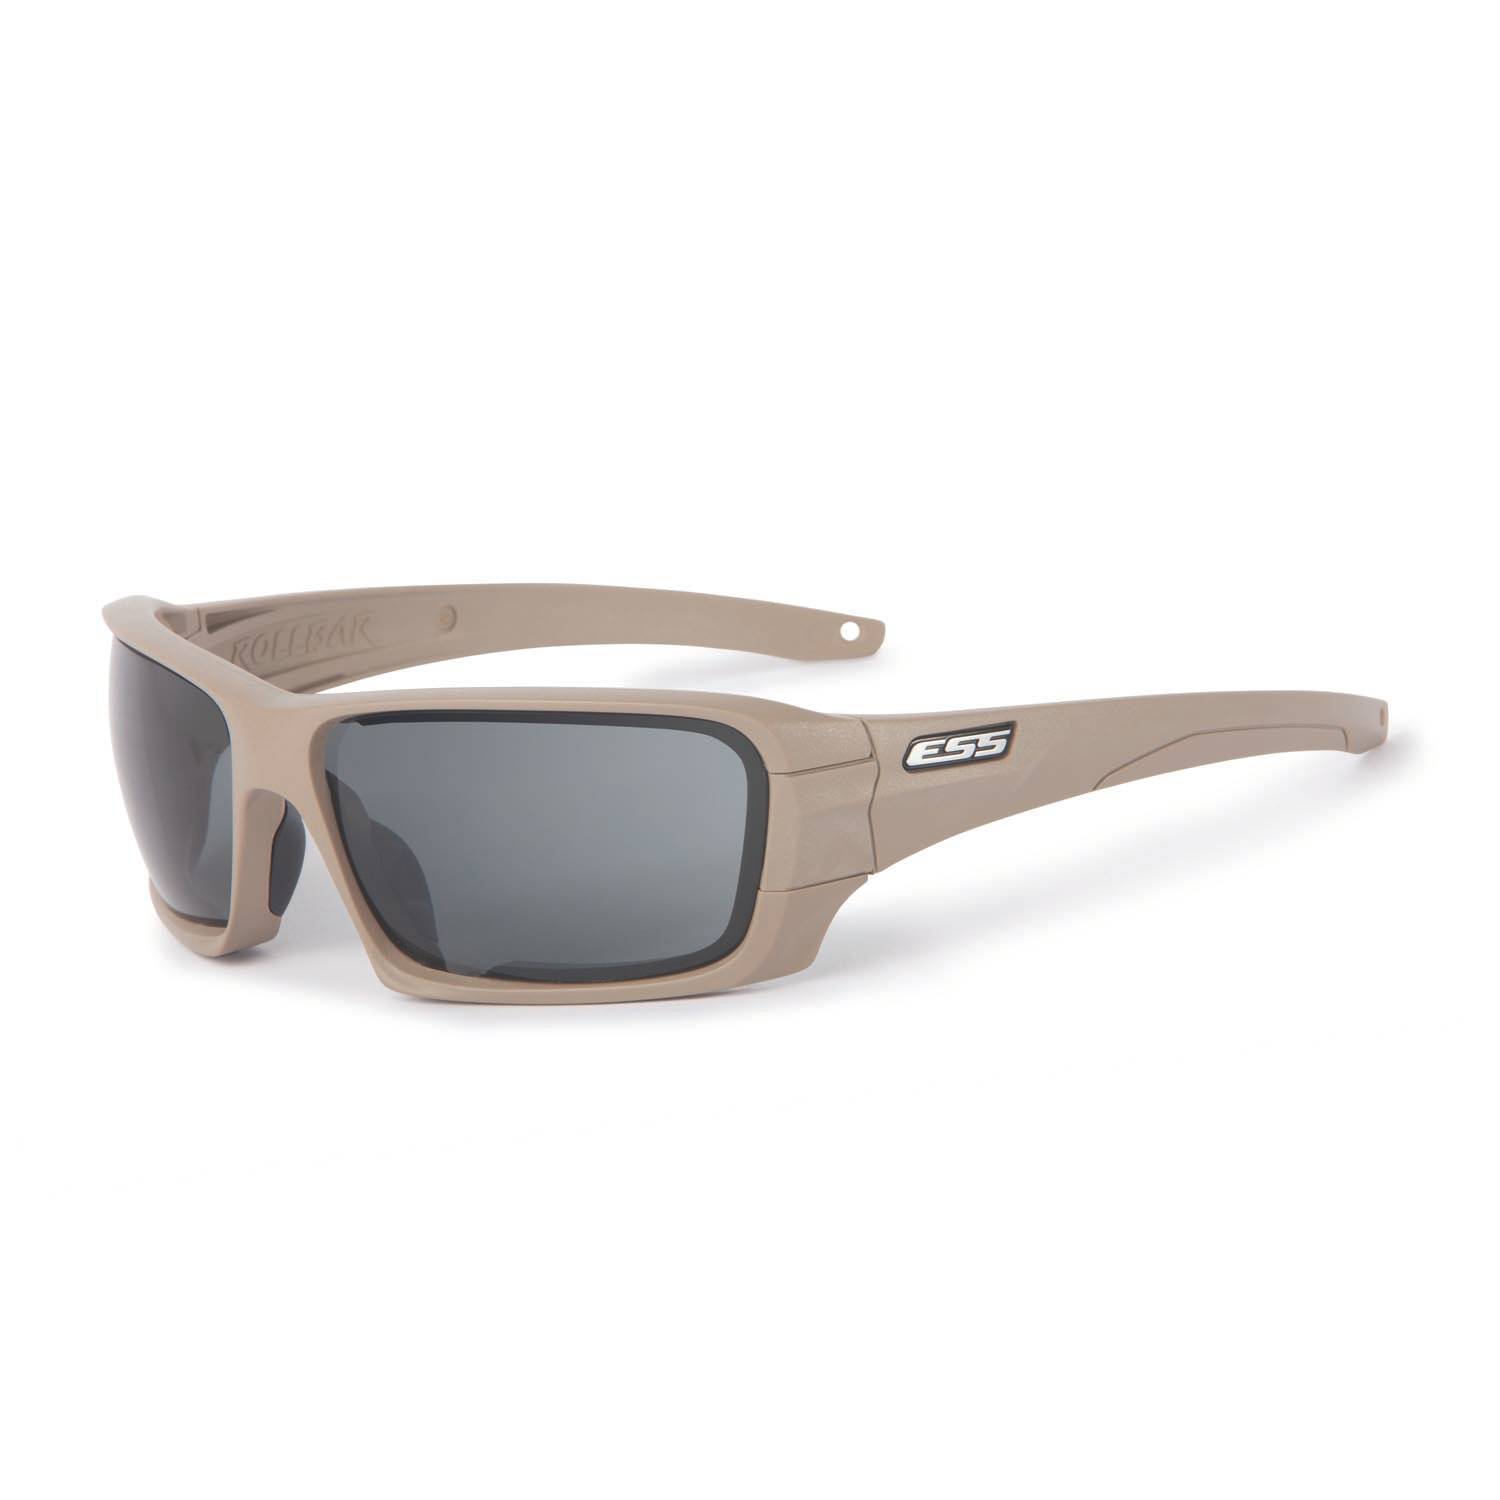 ESS Rollbar Terrain Tan Sunglasses with Interchangeable Lens